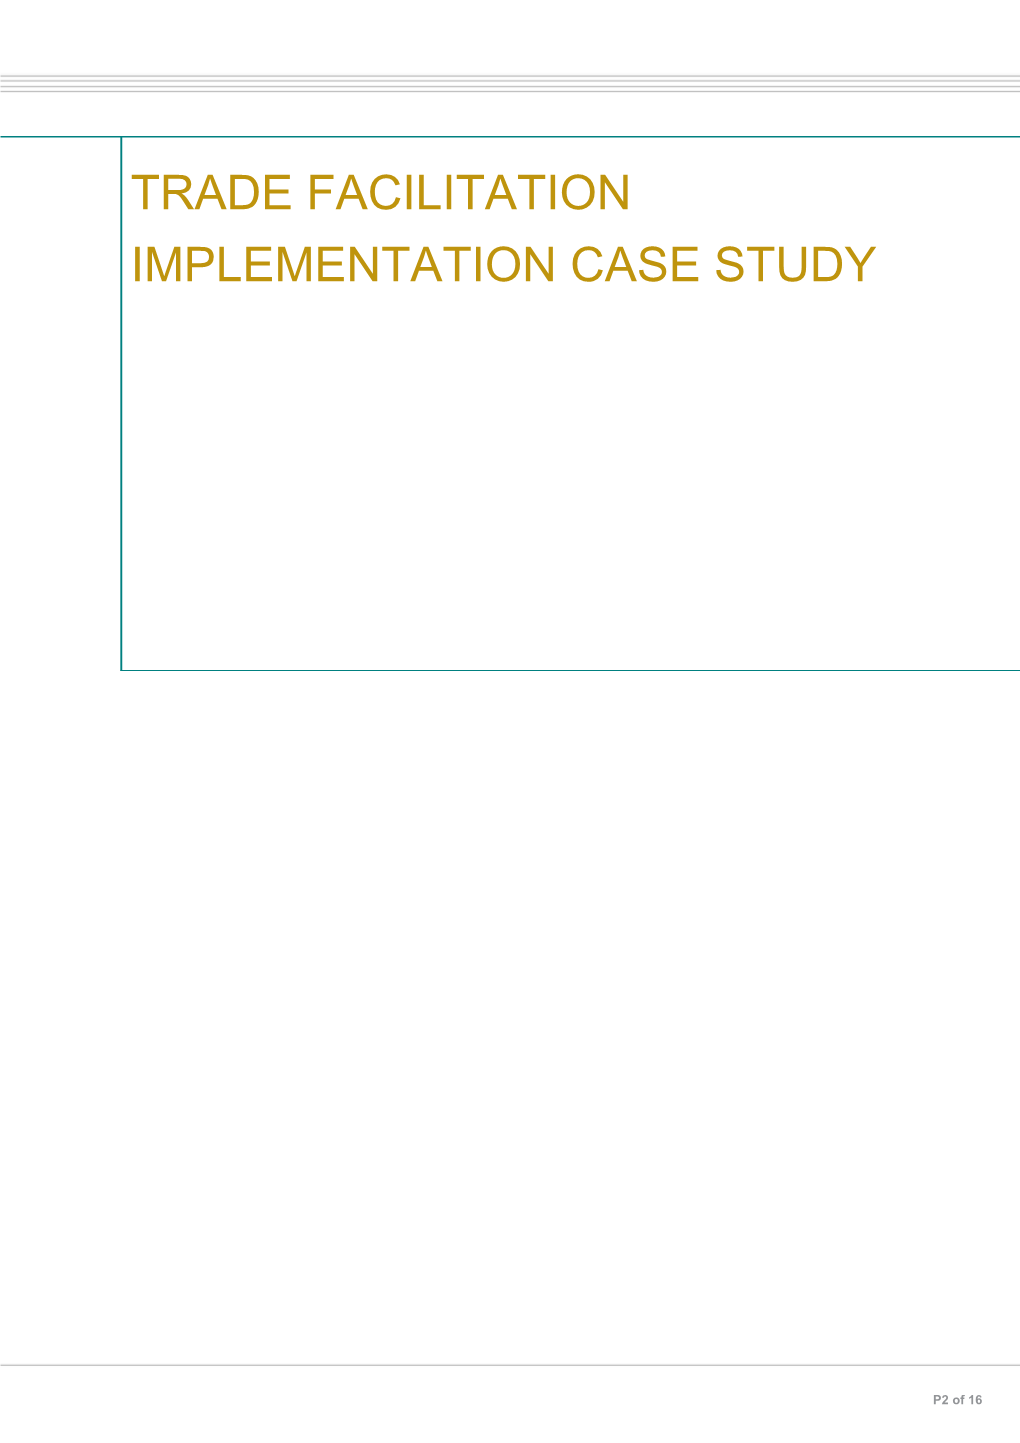 Trade Facilitation Implementation Case Study